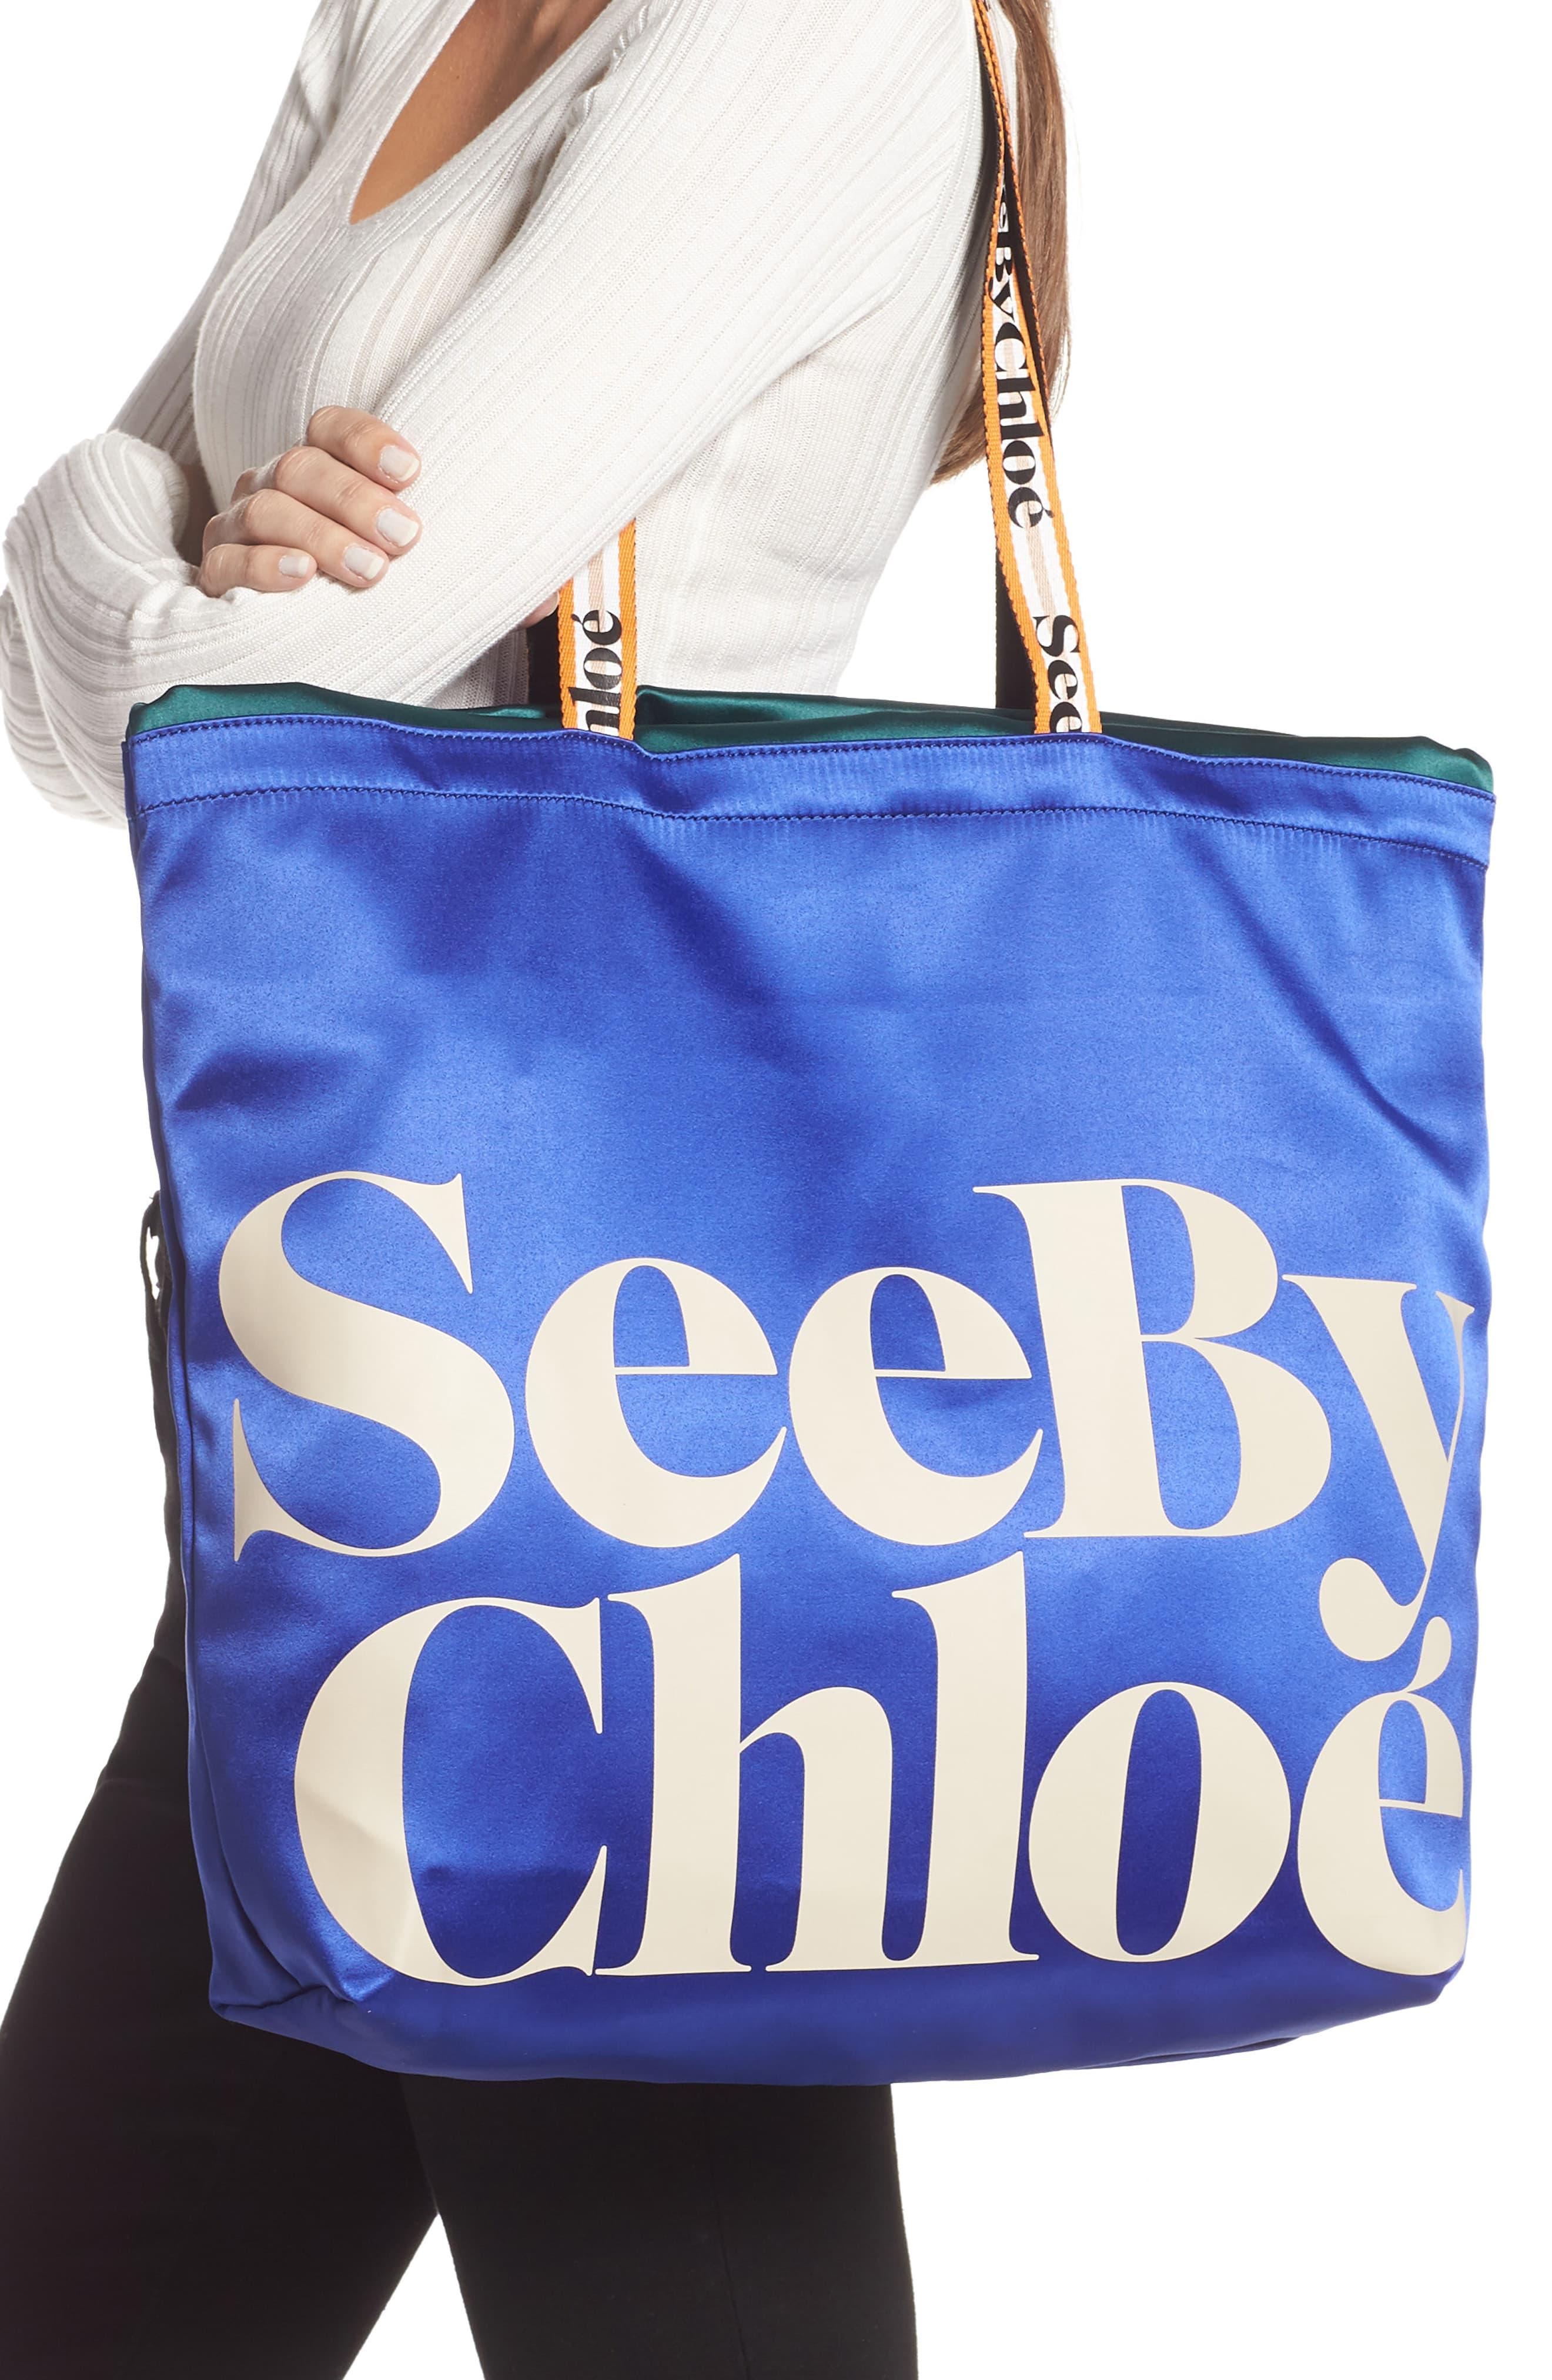 Chloé Tote Bags Sale, 58% OFF | www.ingeniovirtual.com